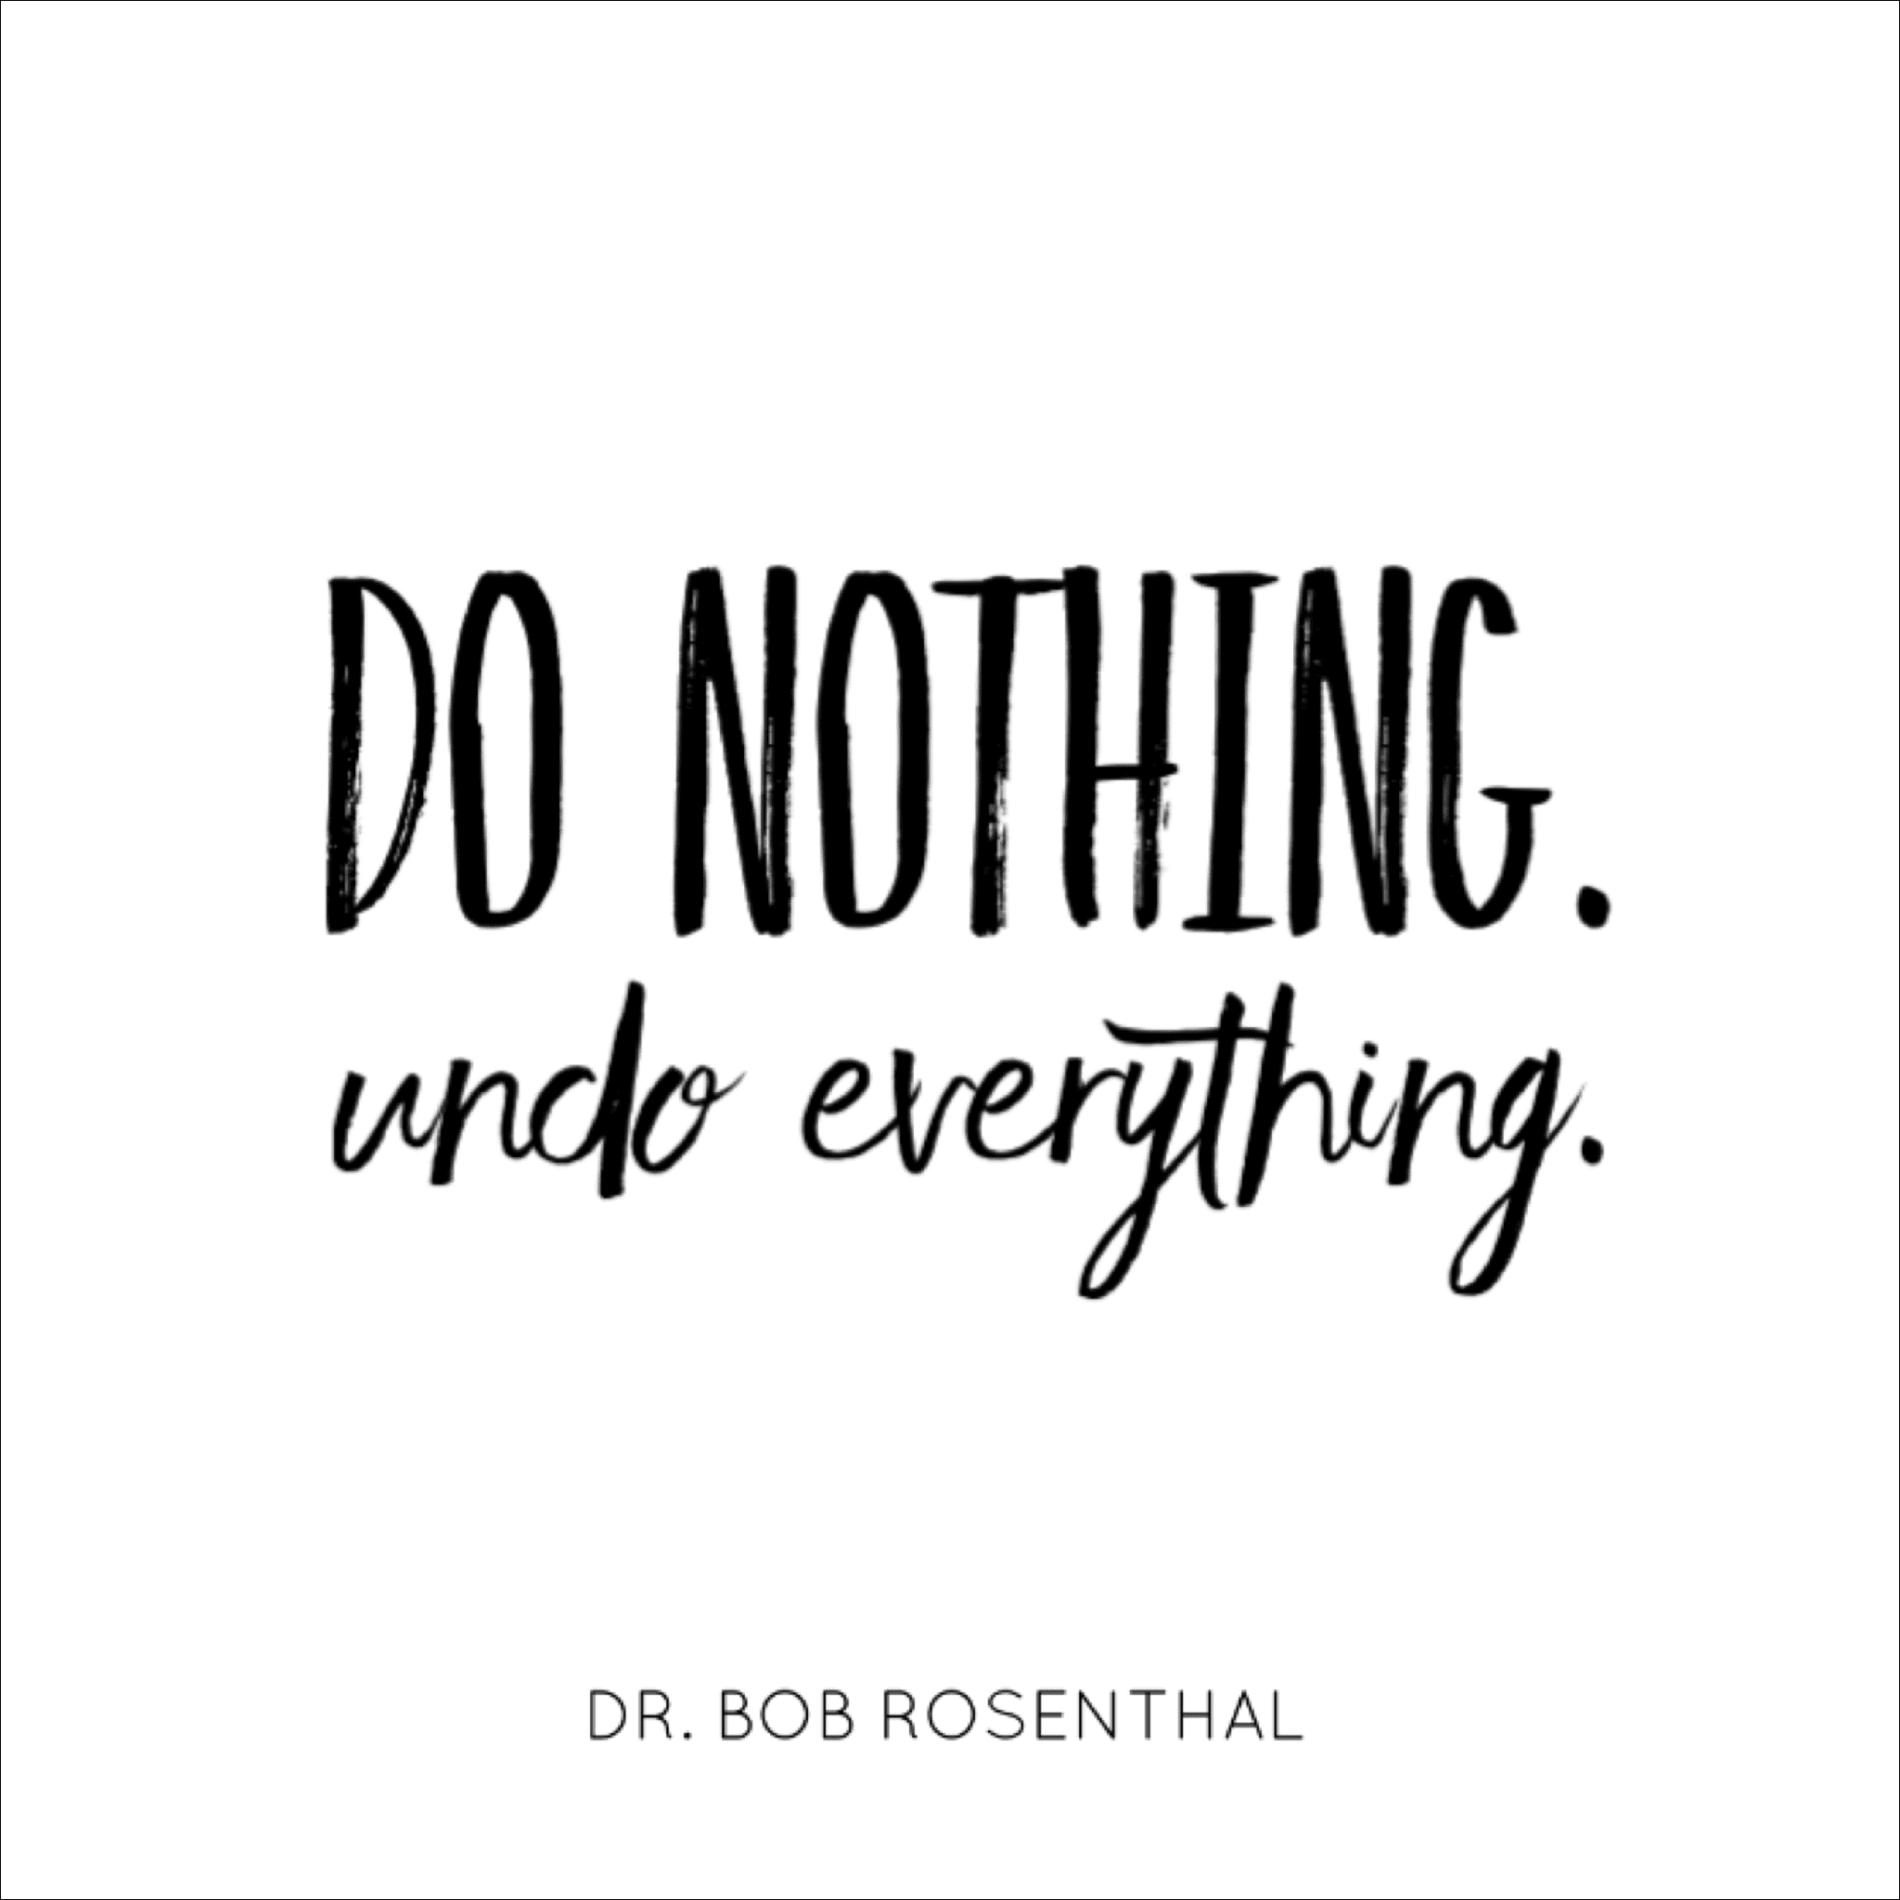 Do Nothing. Undo Everything. -Dr. Bob Rosenthal